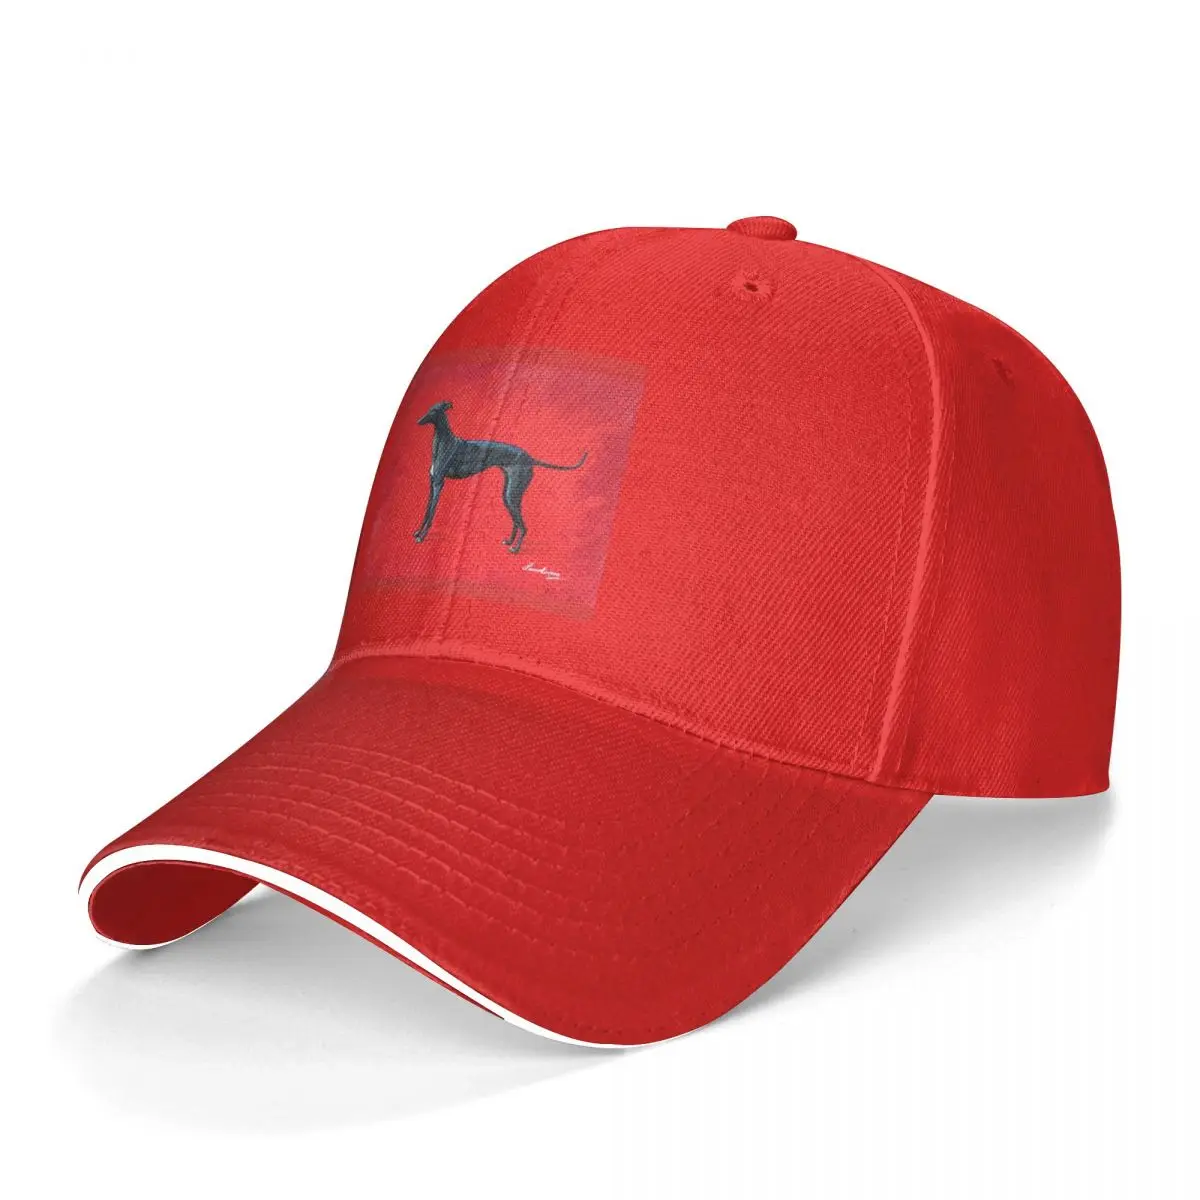 Greyhound Baseball Cap Black Greyhound Girls Polyester Printed Baseball Hat Funny Sports Fashion Cap